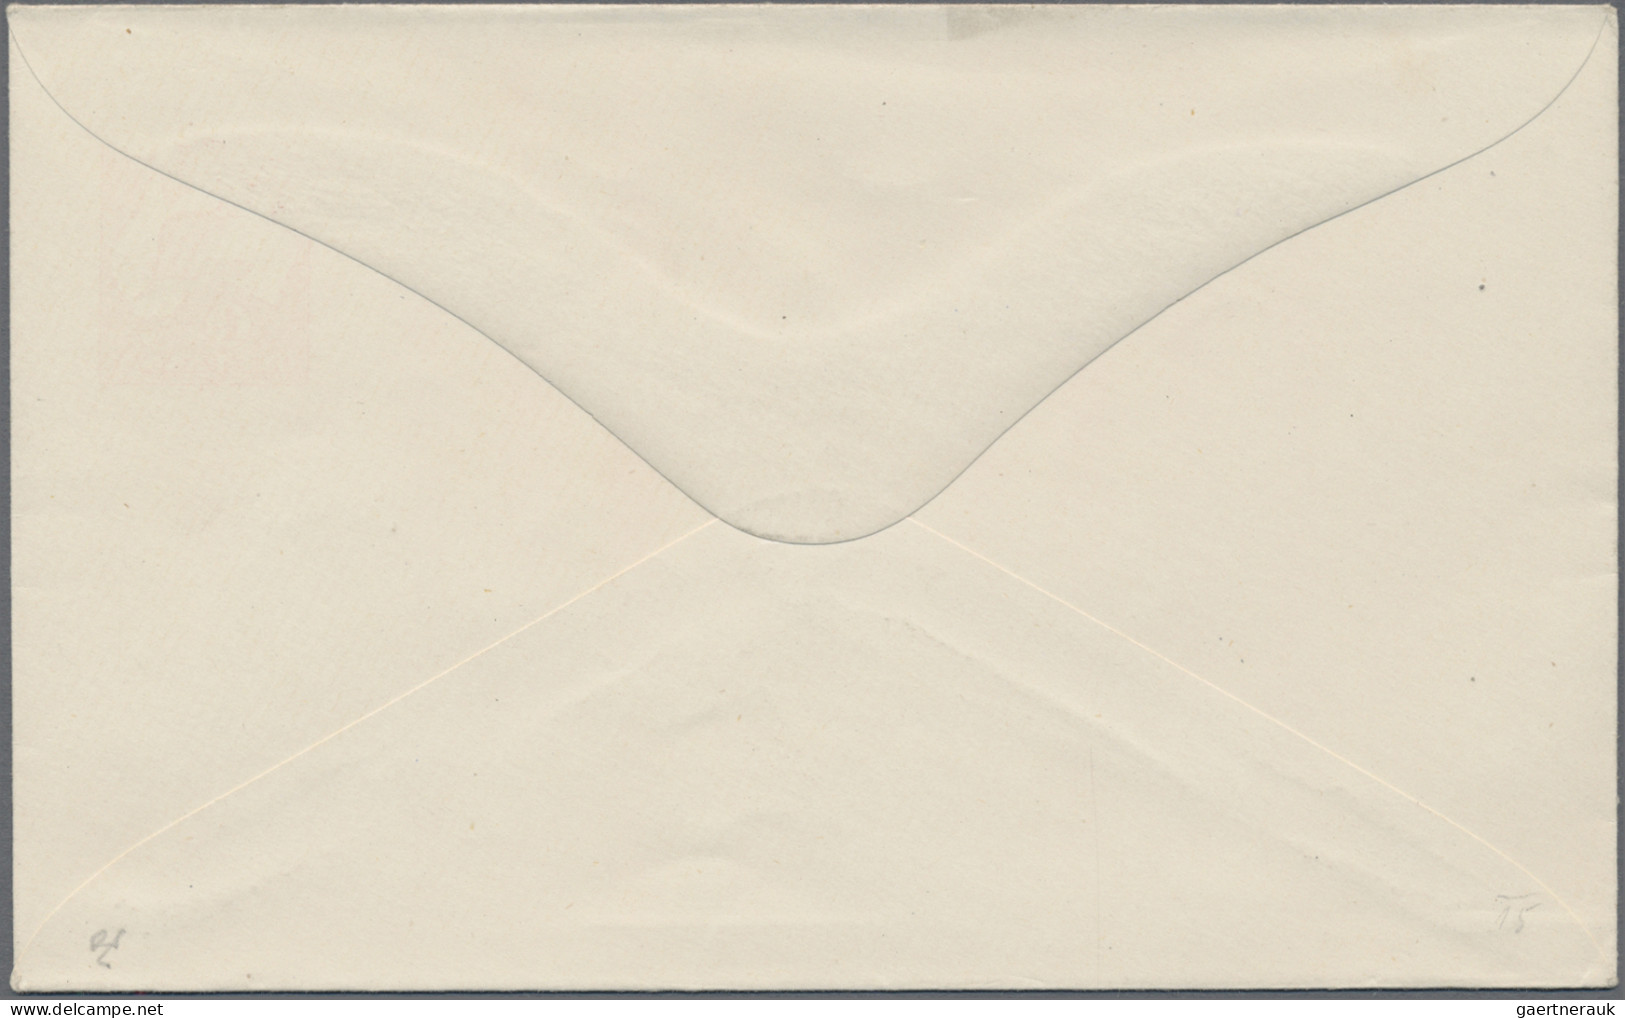 Australia - postal stationery: 1913, Roo stationery (4): envelope 1d uprated SA